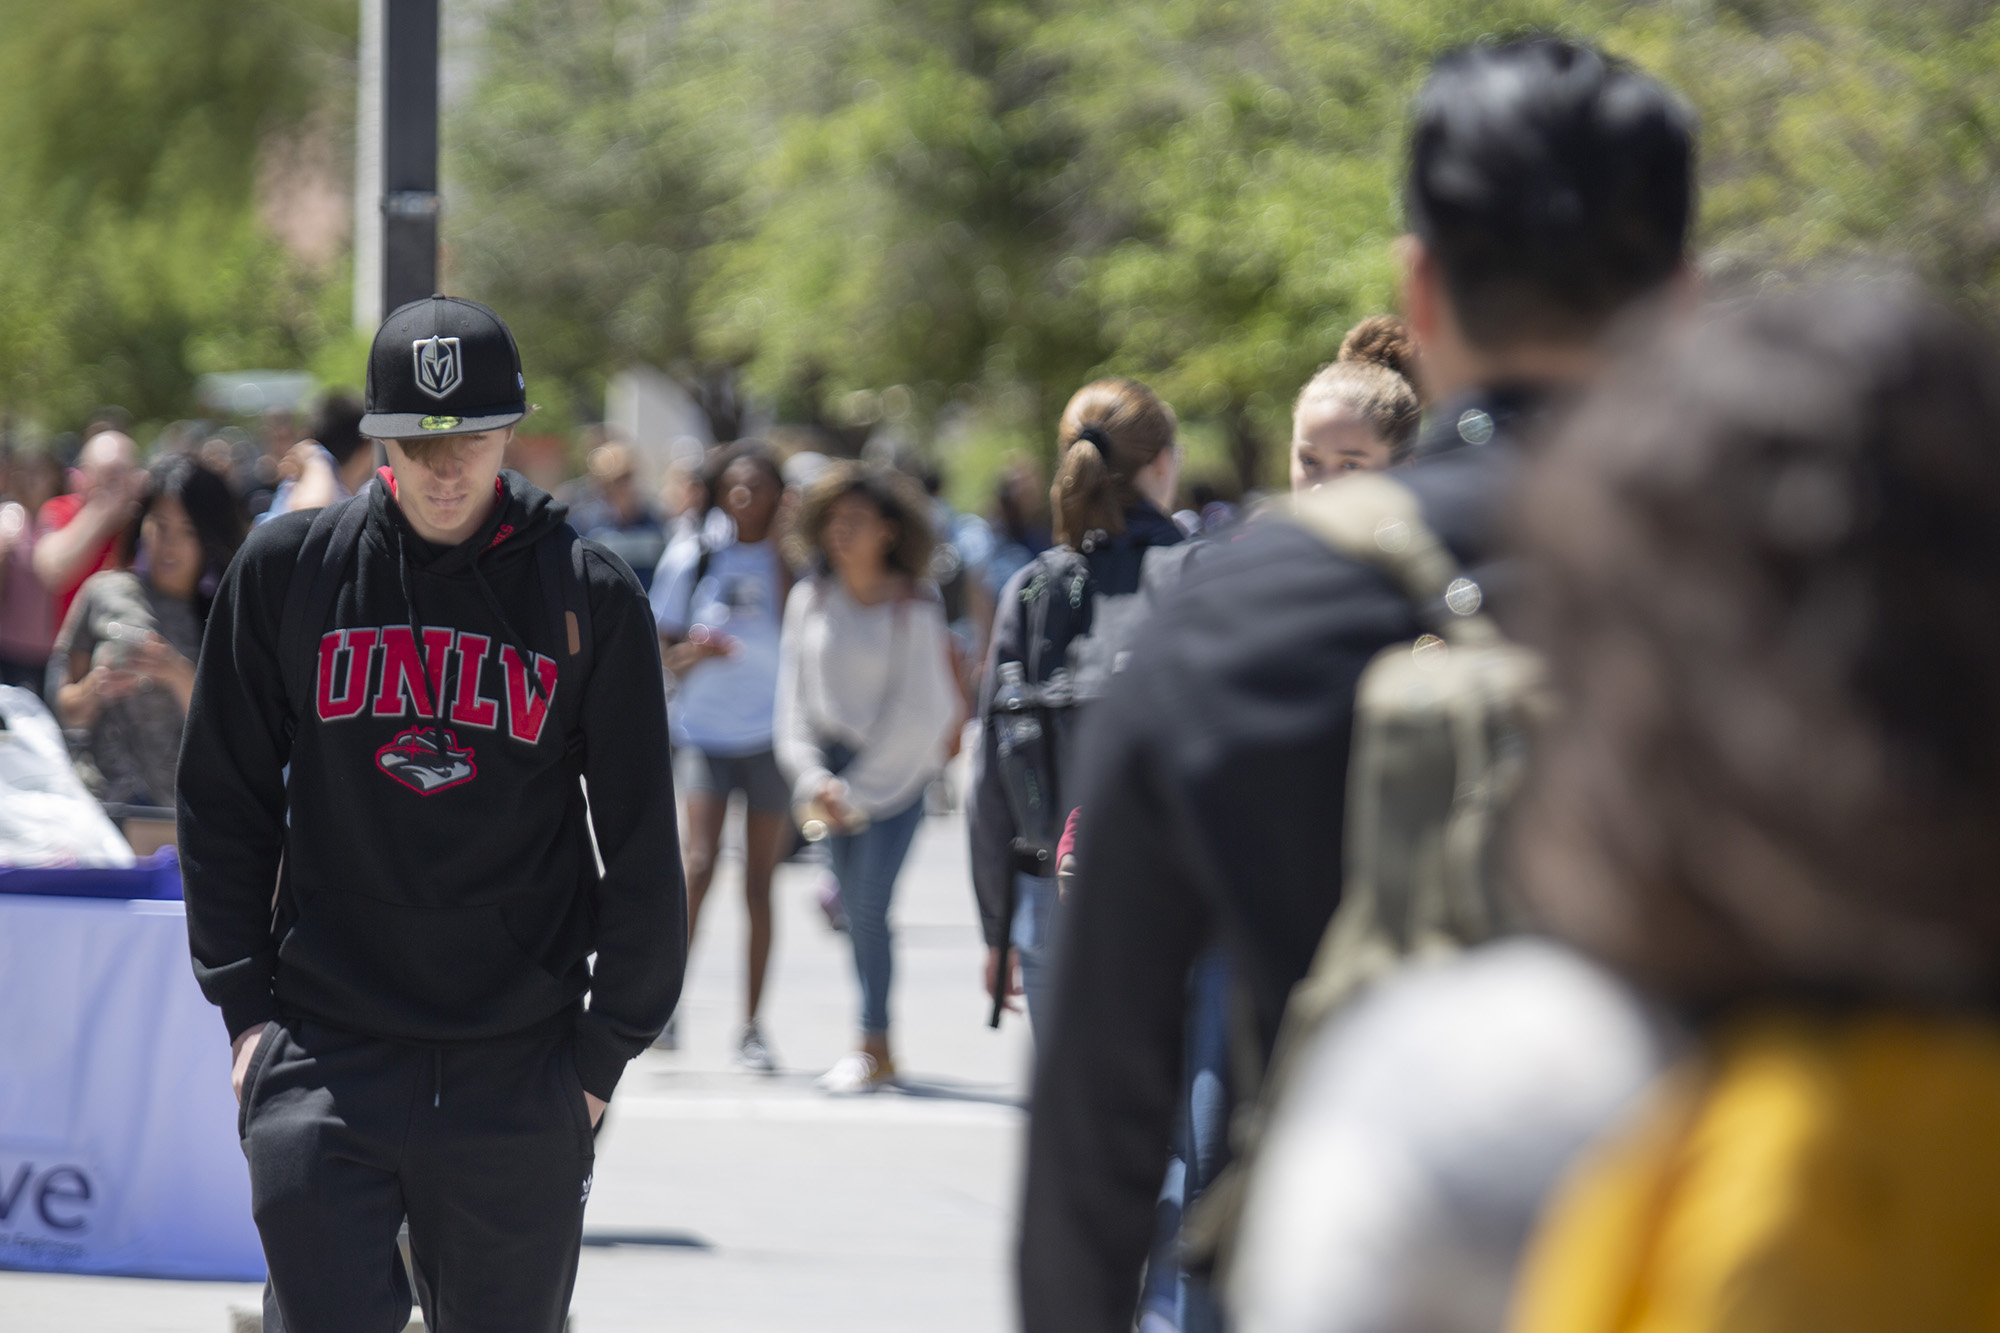 Students walking an outdoor university pathway.